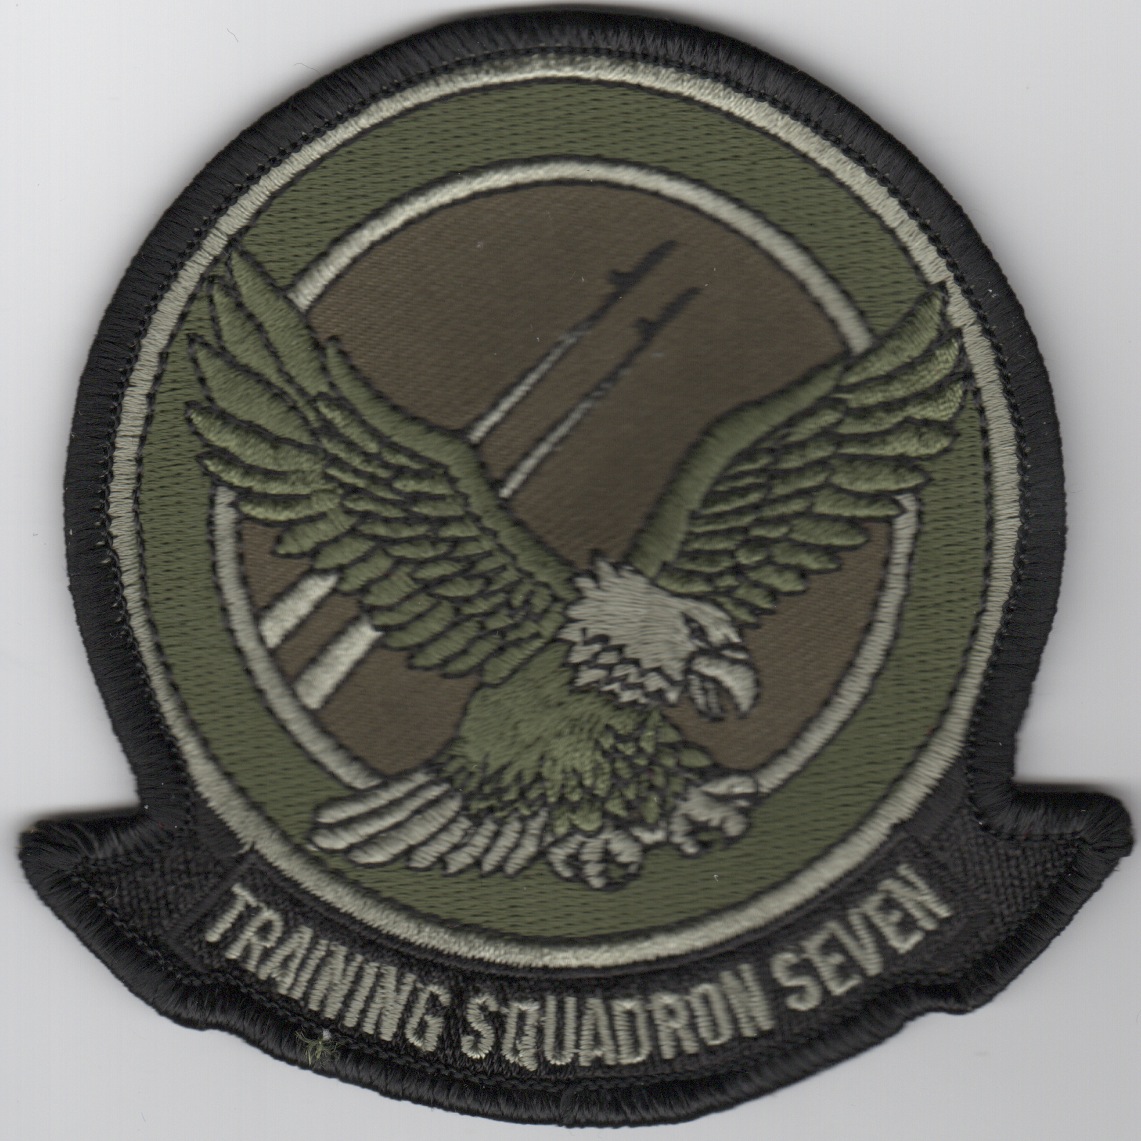 Training Squadron Seven Squadron Patch (Sub)